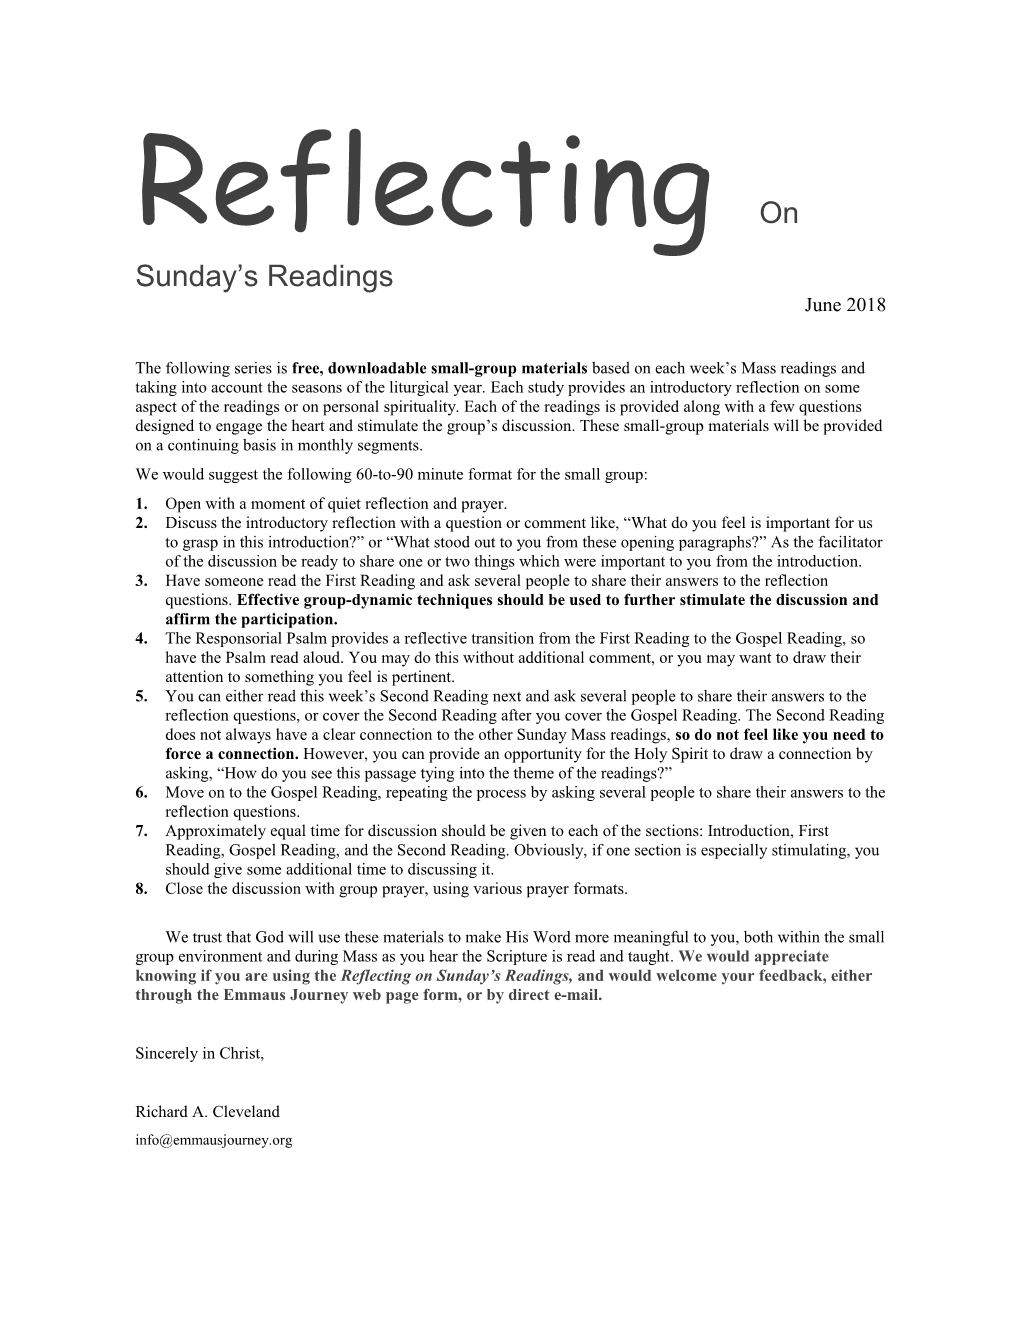 Reflecting on Sunday S Readings s2